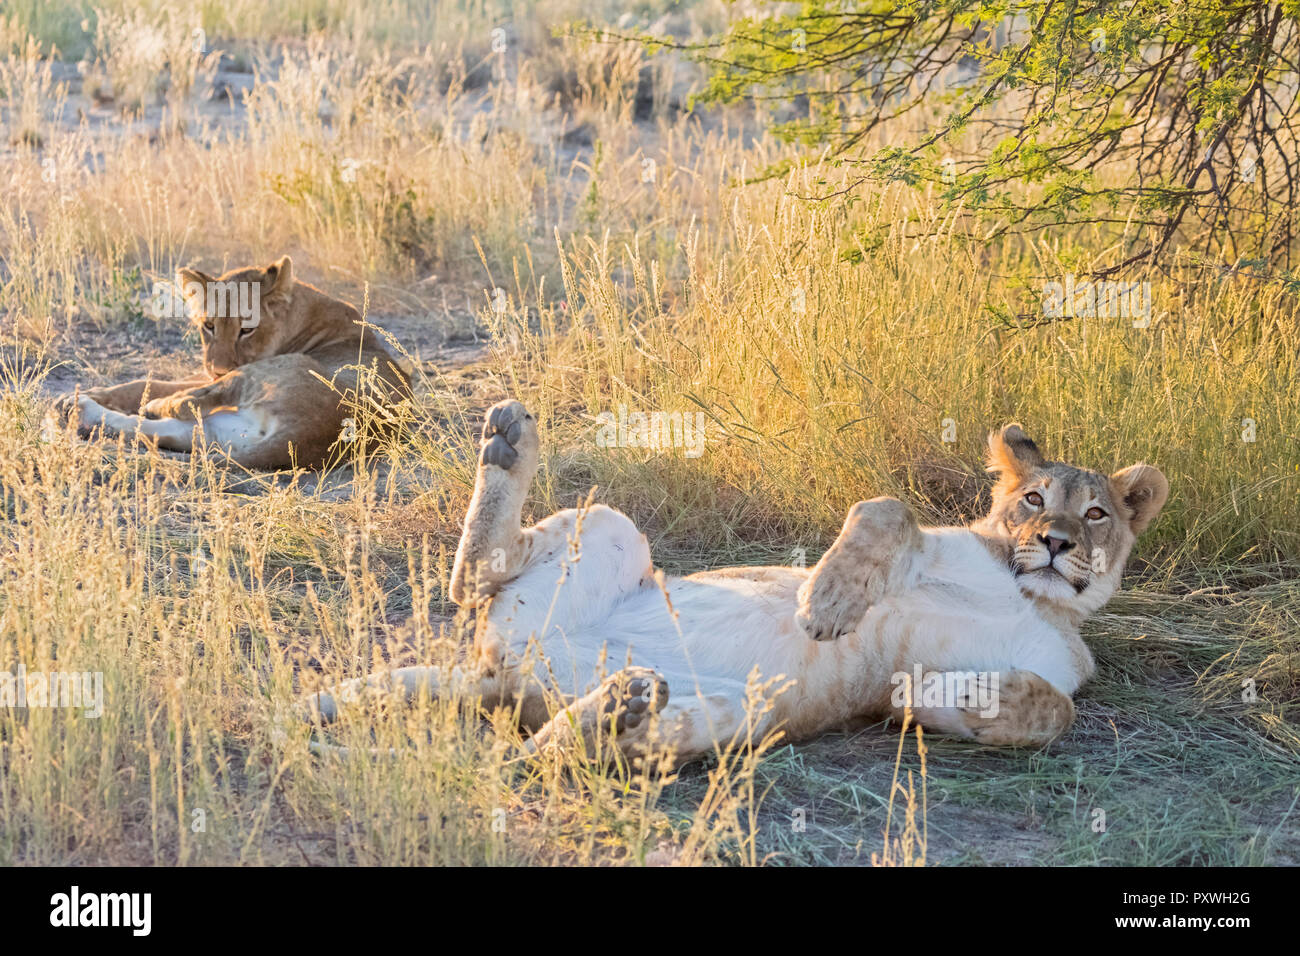 Il Botswana, Kgalagadi Parco transfrontaliero, lion Panthera leo Foto Stock